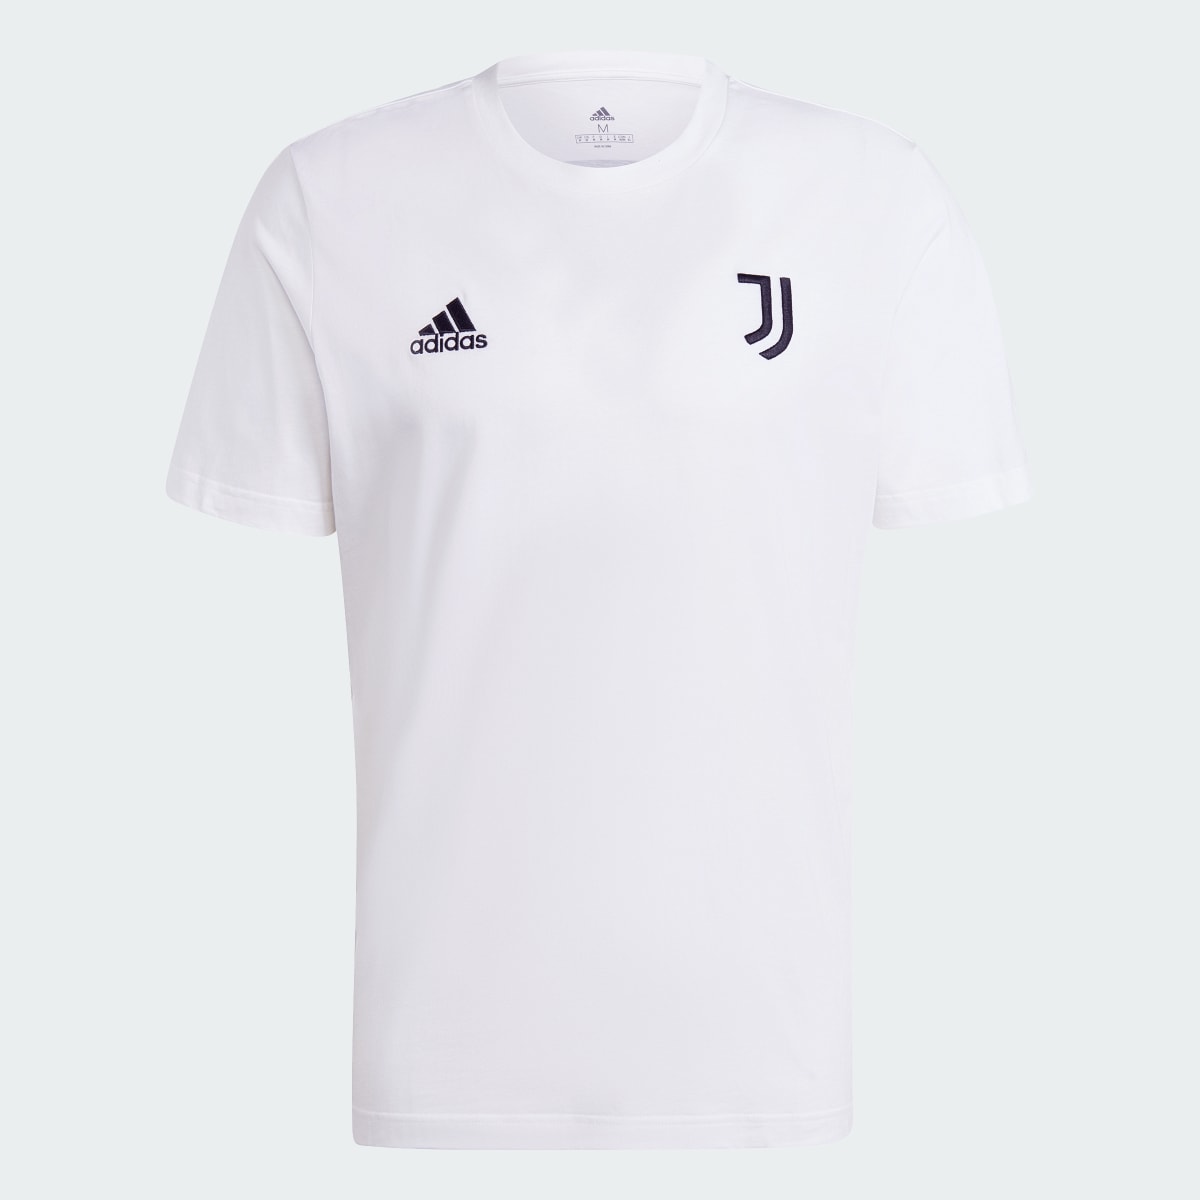 Adidas T-shirt Juventus DNA. 5